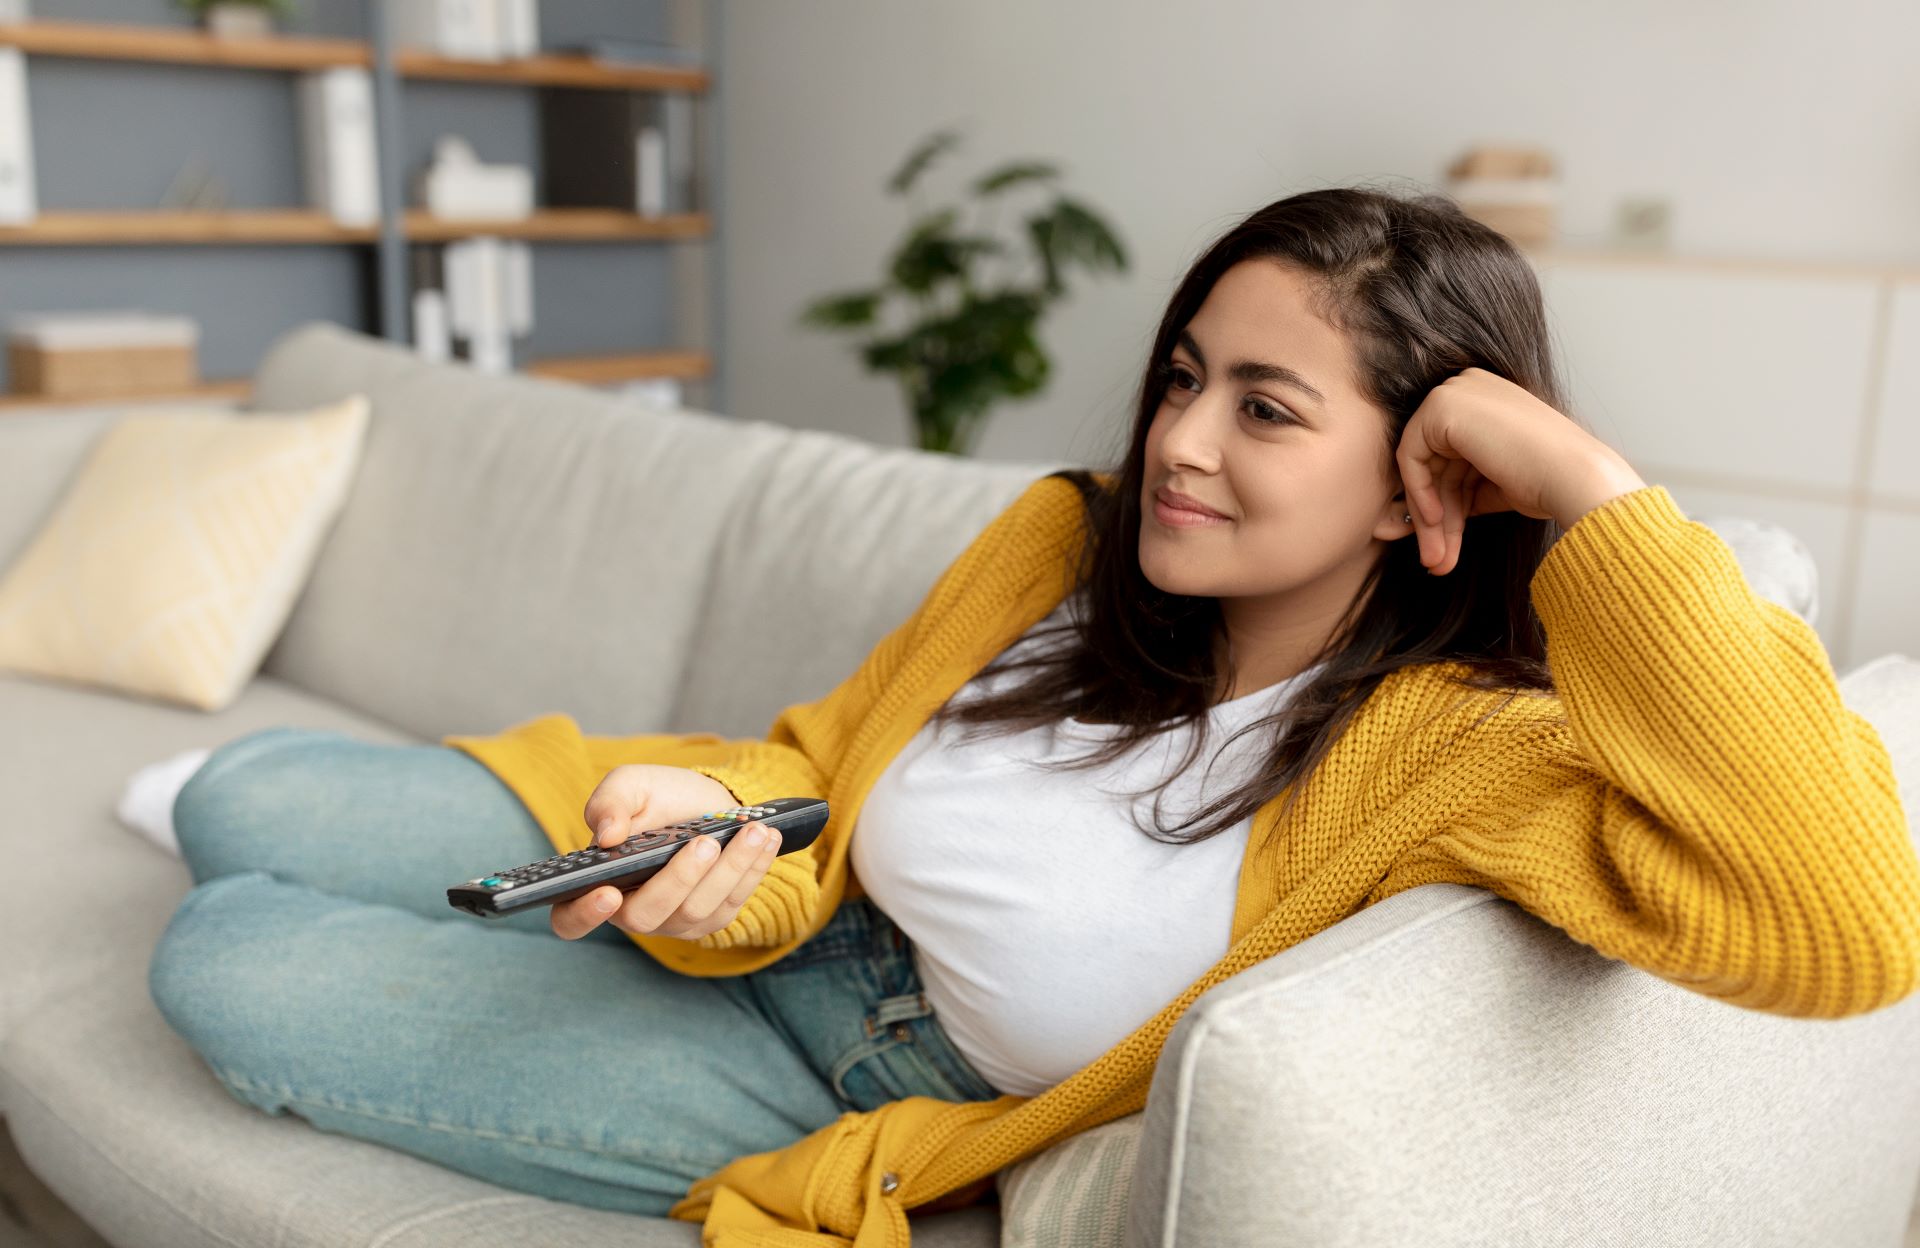 Woman-watching-tv-yellow-sweater